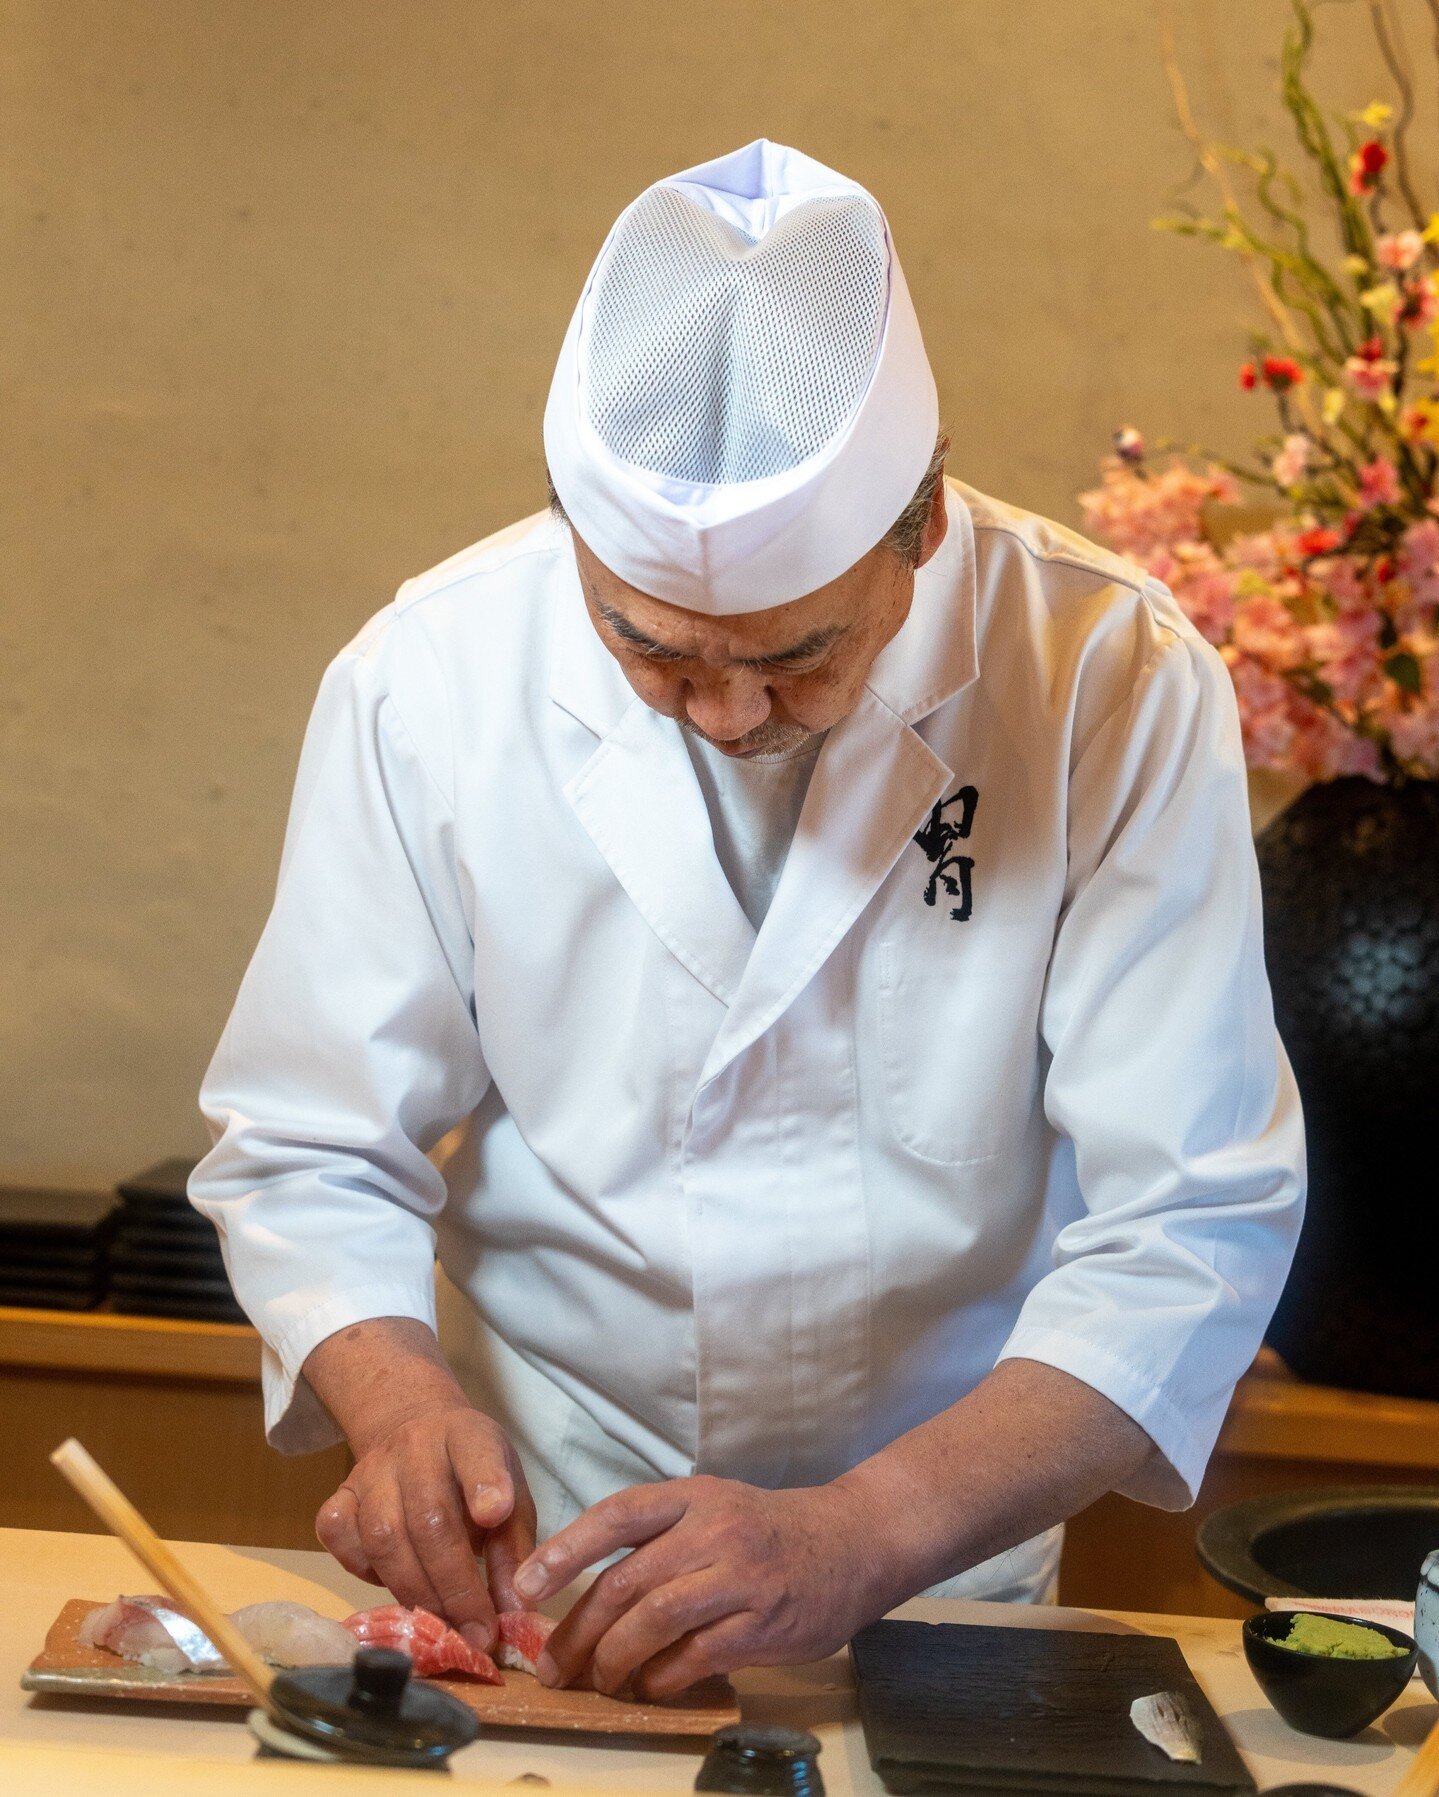 Exceptional Japanese cuisine meets service that's a symphony of precision and hospitality! Book your table! #UmamiJourney 🍣🥢🙌🏻 

◾️◽️◾️◽️◾️◽️◾️◽️◾️◽️ 
🍣 𝐊𝐀𝐁𝐔𝐓𝐎 - 𝐄𝐃𝐎𝐌𝐀𝐄 𝐒𝐔𝐒𝐇𝐈 
⏰ ᴅᴀɪʟʏ: 5:30 ᴘᴍ - 9:00 ᴘᴍ 
📍 5040 ꜱᴘʀɪɴɢ ᴍᴏᴜɴᴛᴀɪɴ 